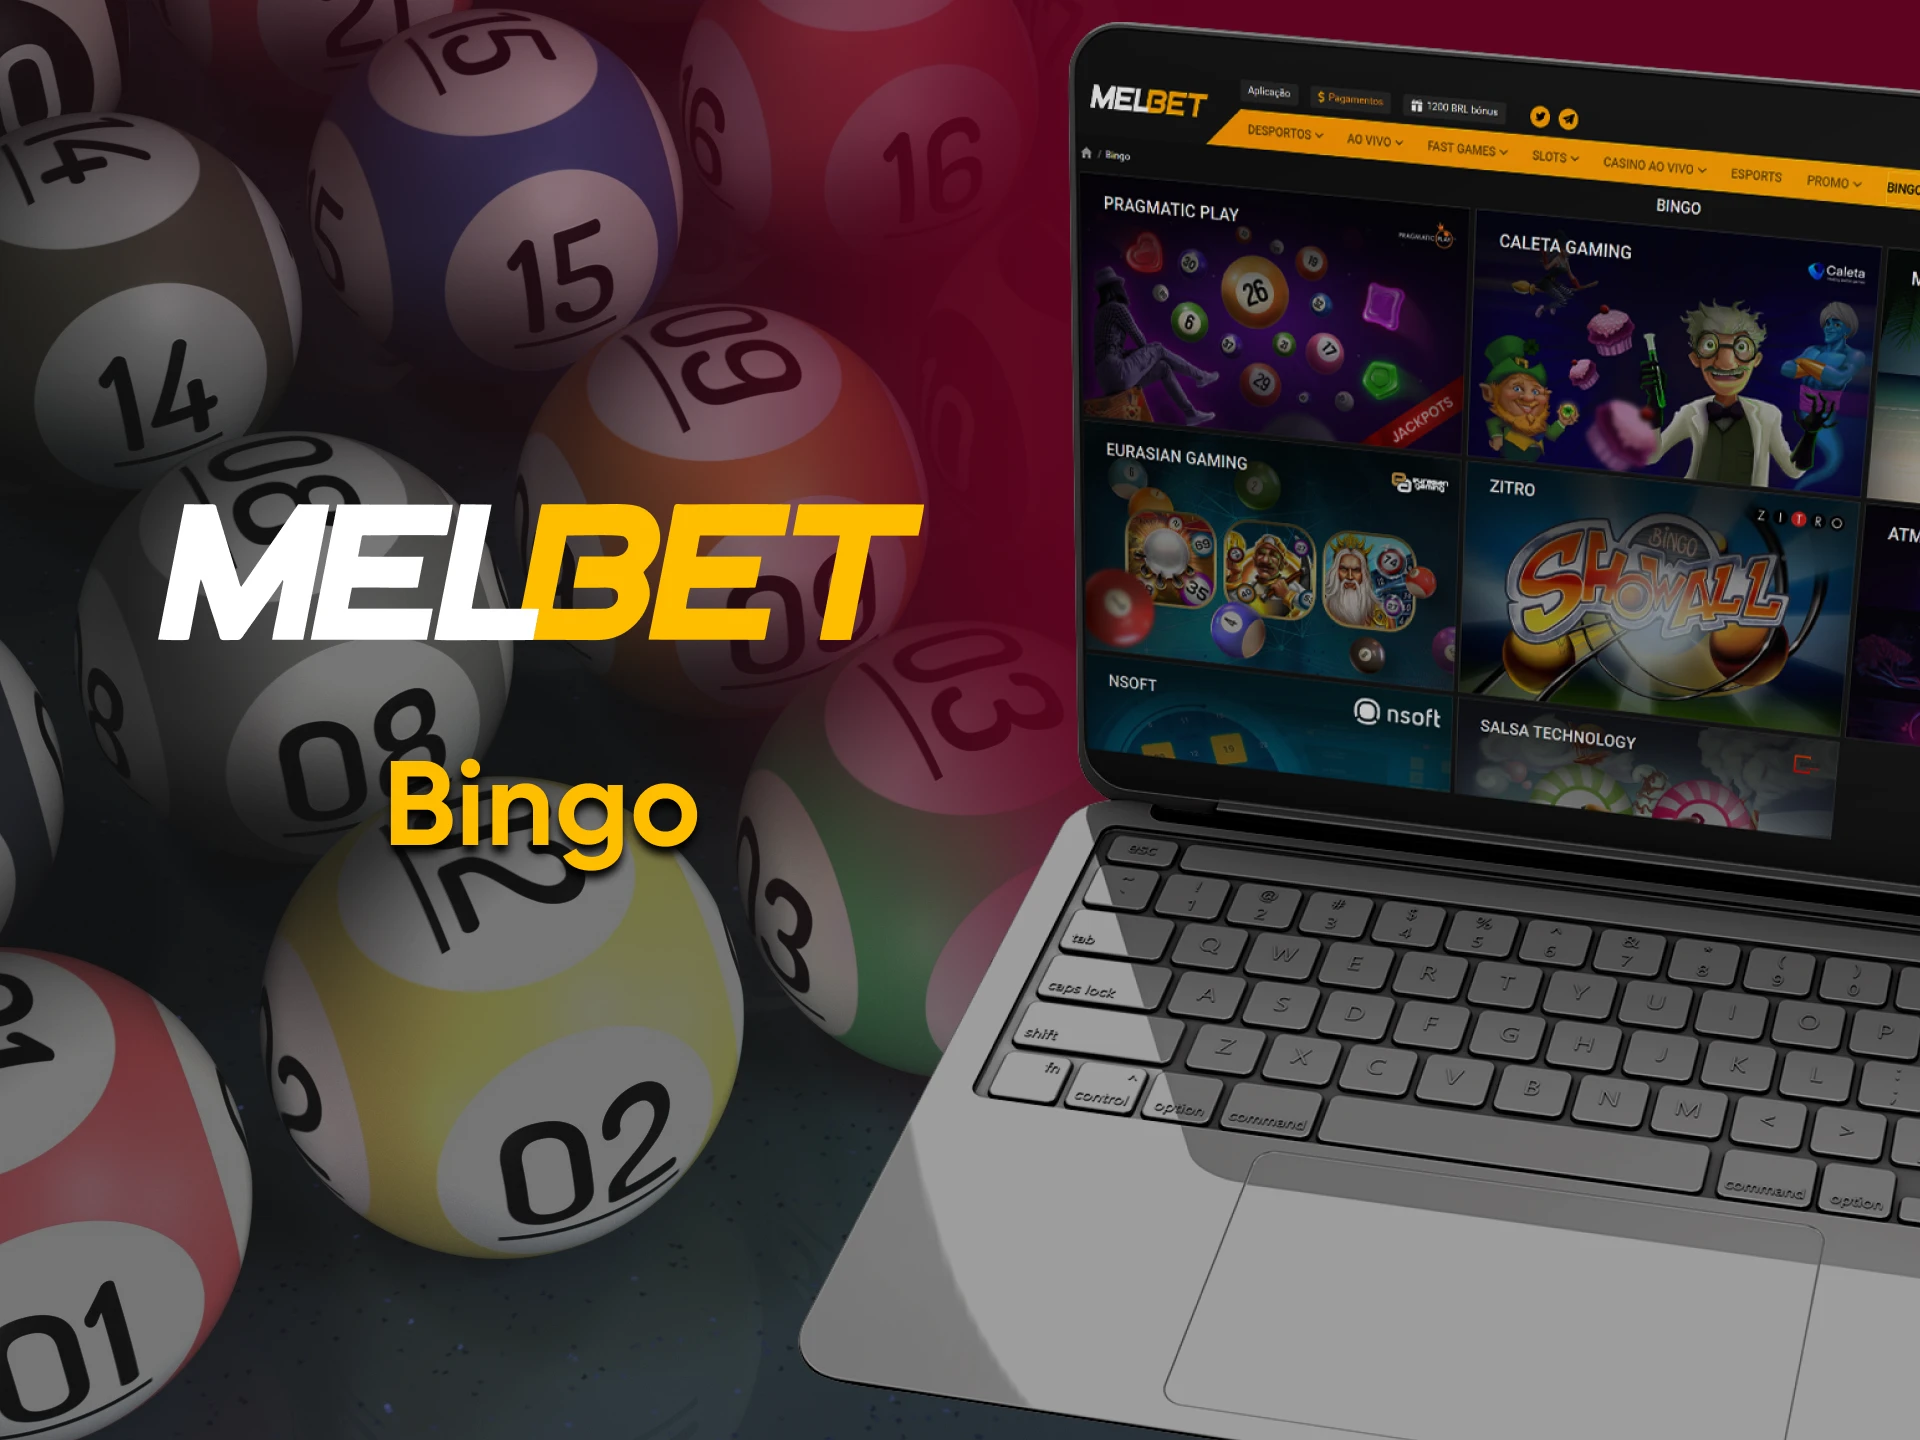 For playing at Melbet choose Bingo.